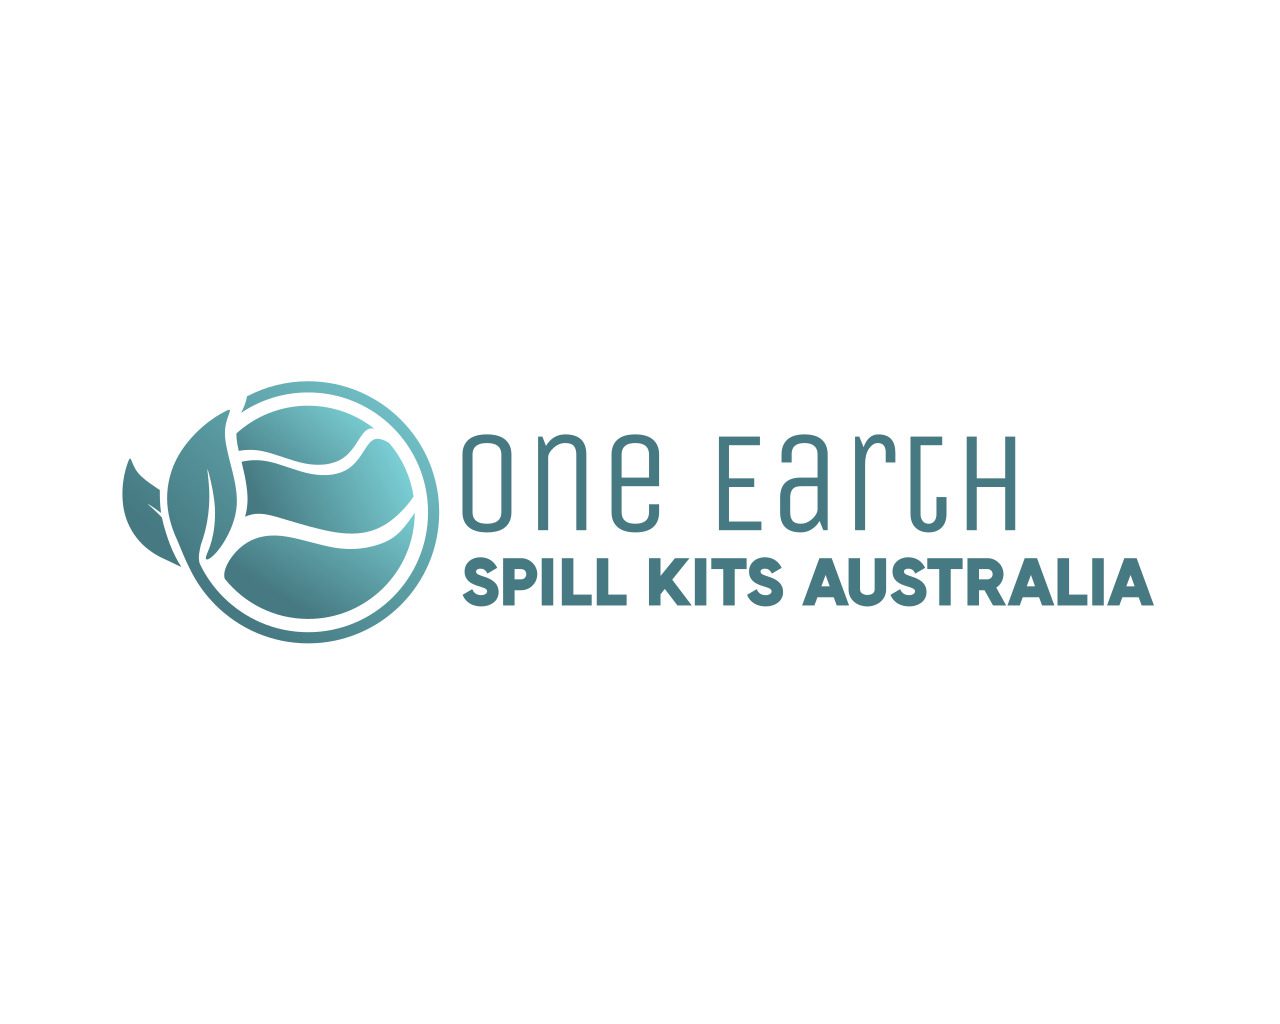 One Earth Spill Kits Australia